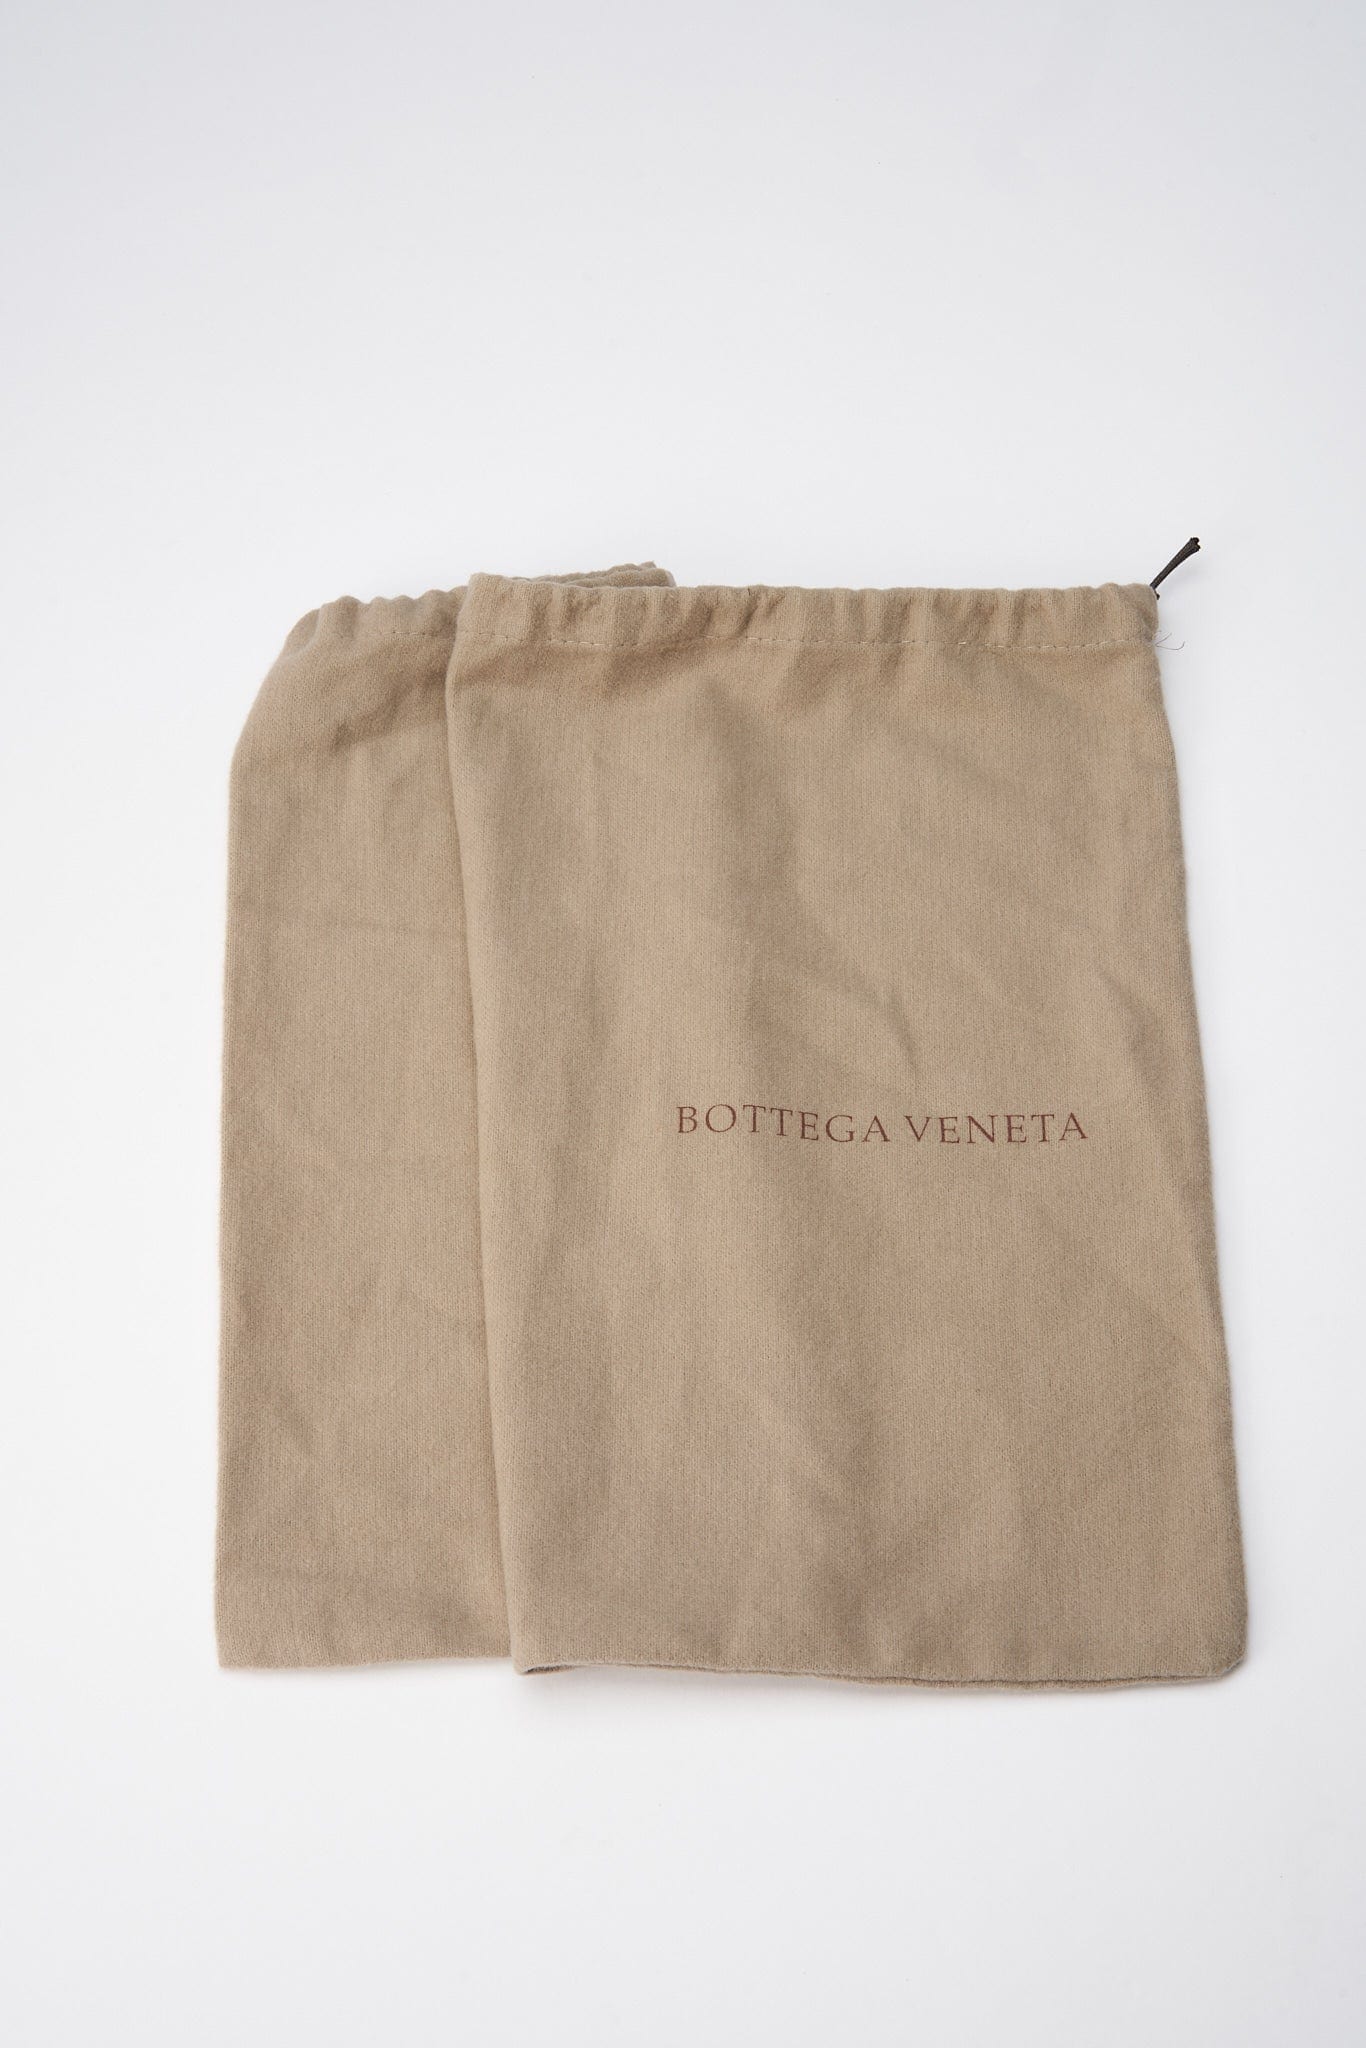 Bottega Veneta Intrecciato Leather Clutch Bag